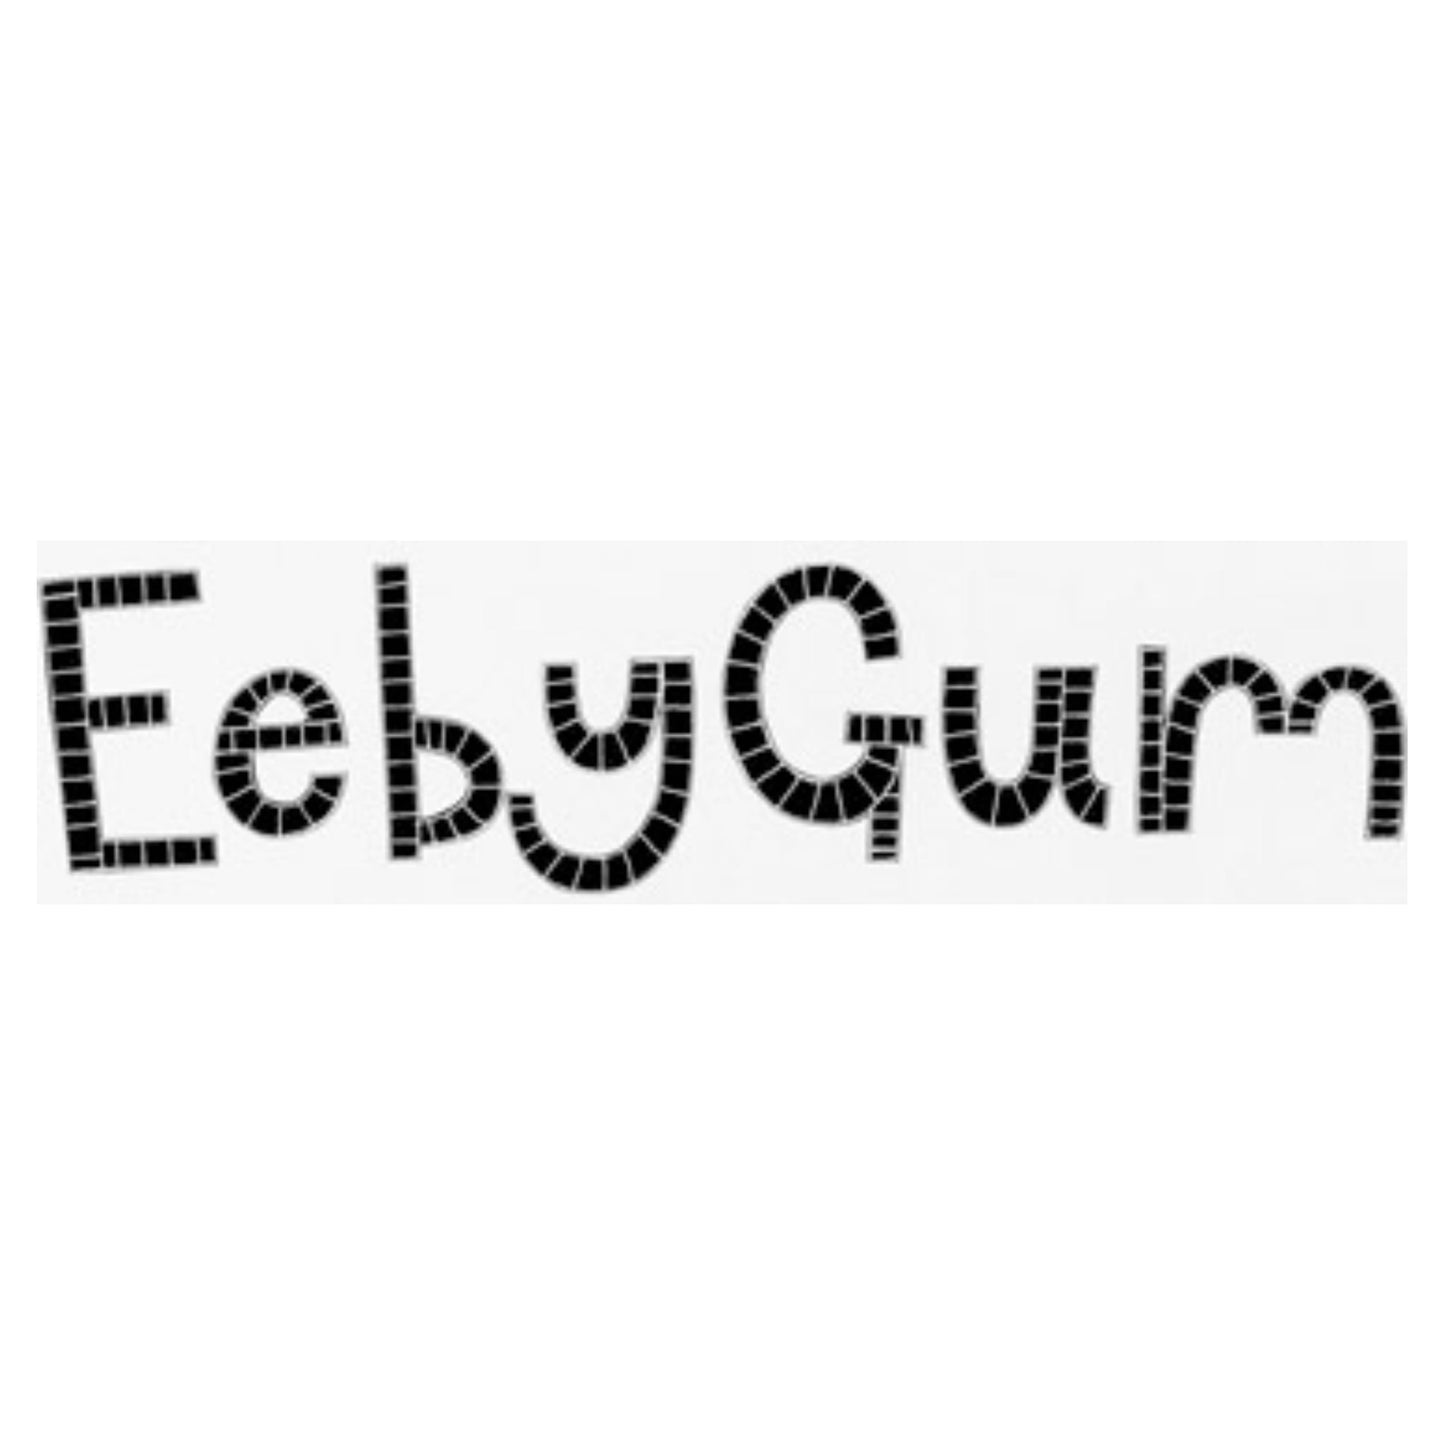 Eeby Gum Mug - The Great Yorkshire Shop